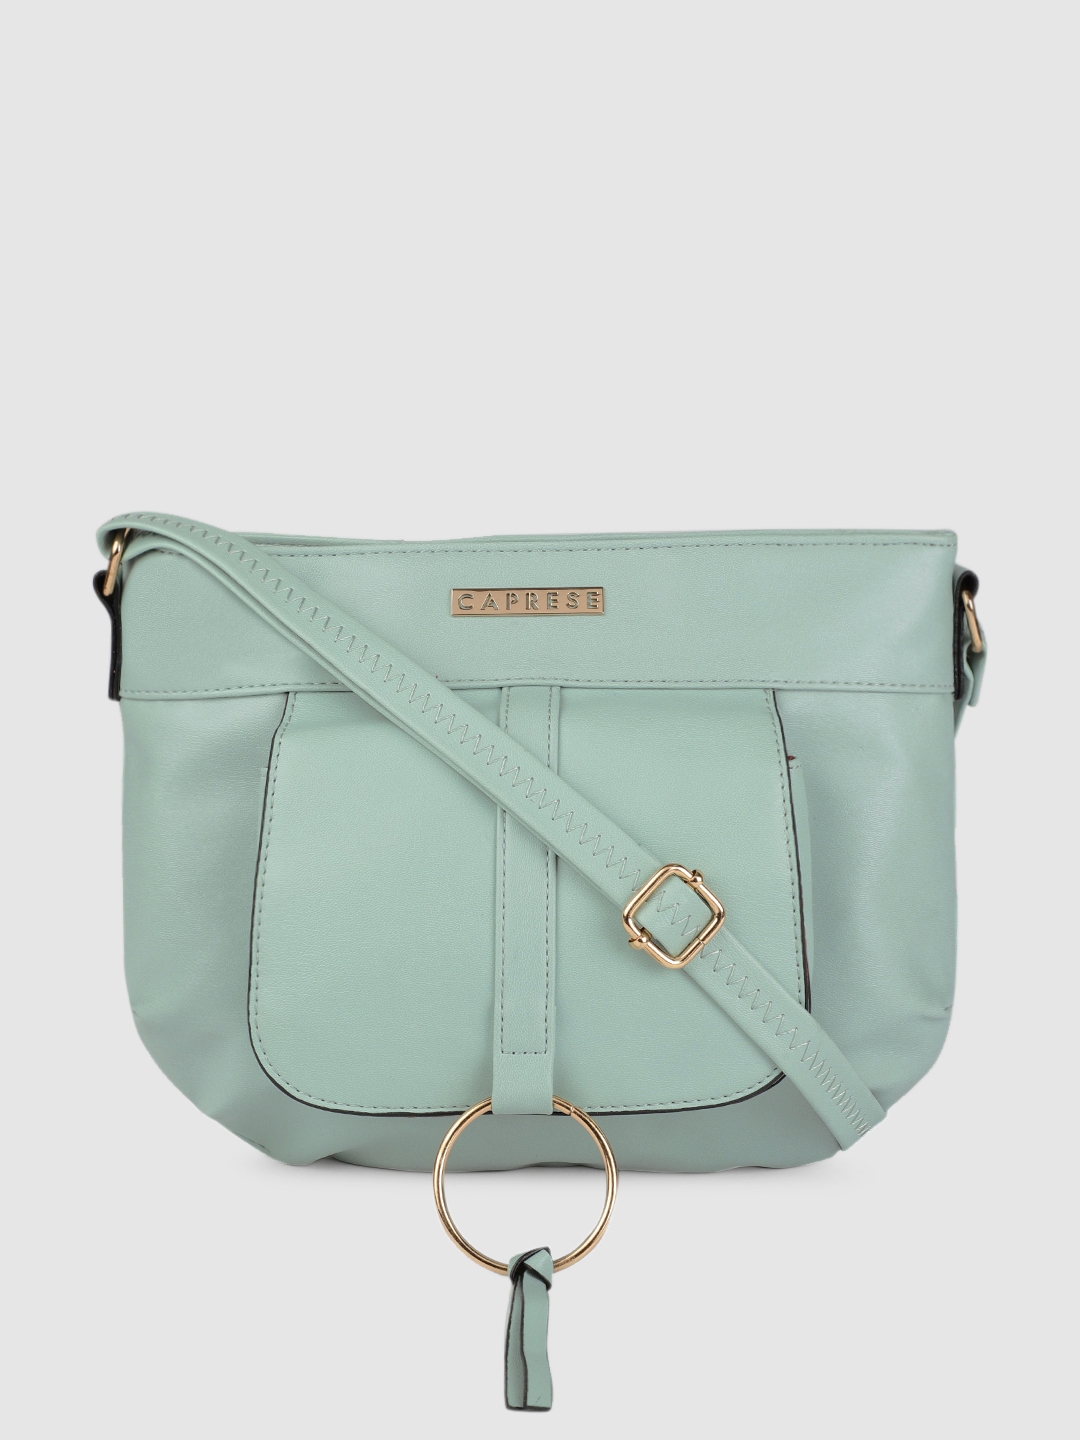 Buy Caprese YONDELLA women's Sling Bag (PEACH) at Amazon.in